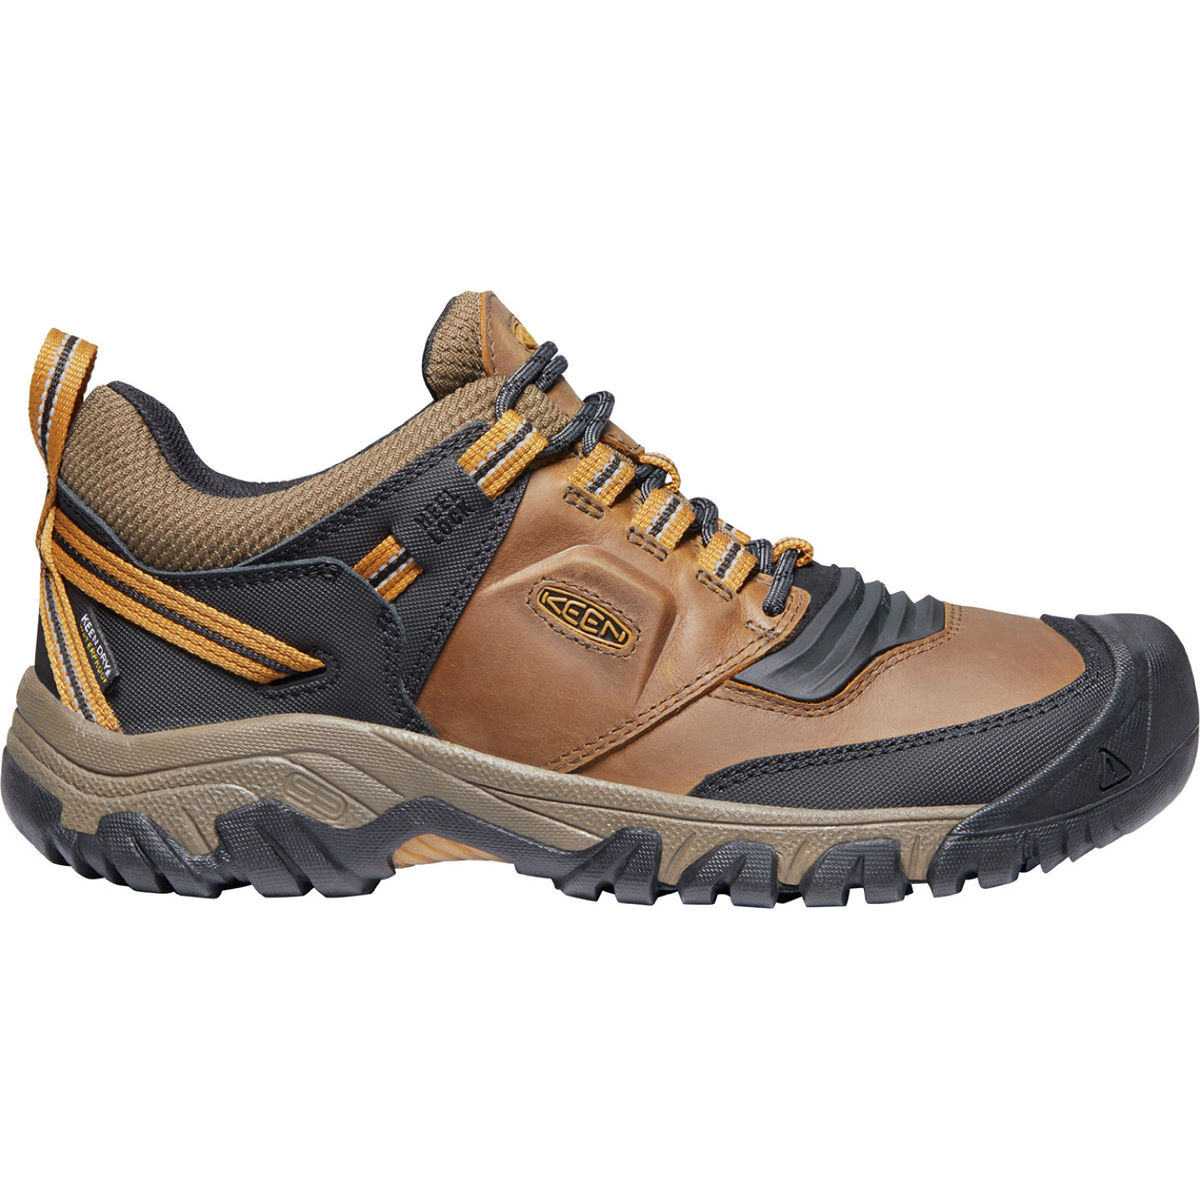 Zapatillas de senderismo impermeables Keen Ridge Flex - Zapatillas